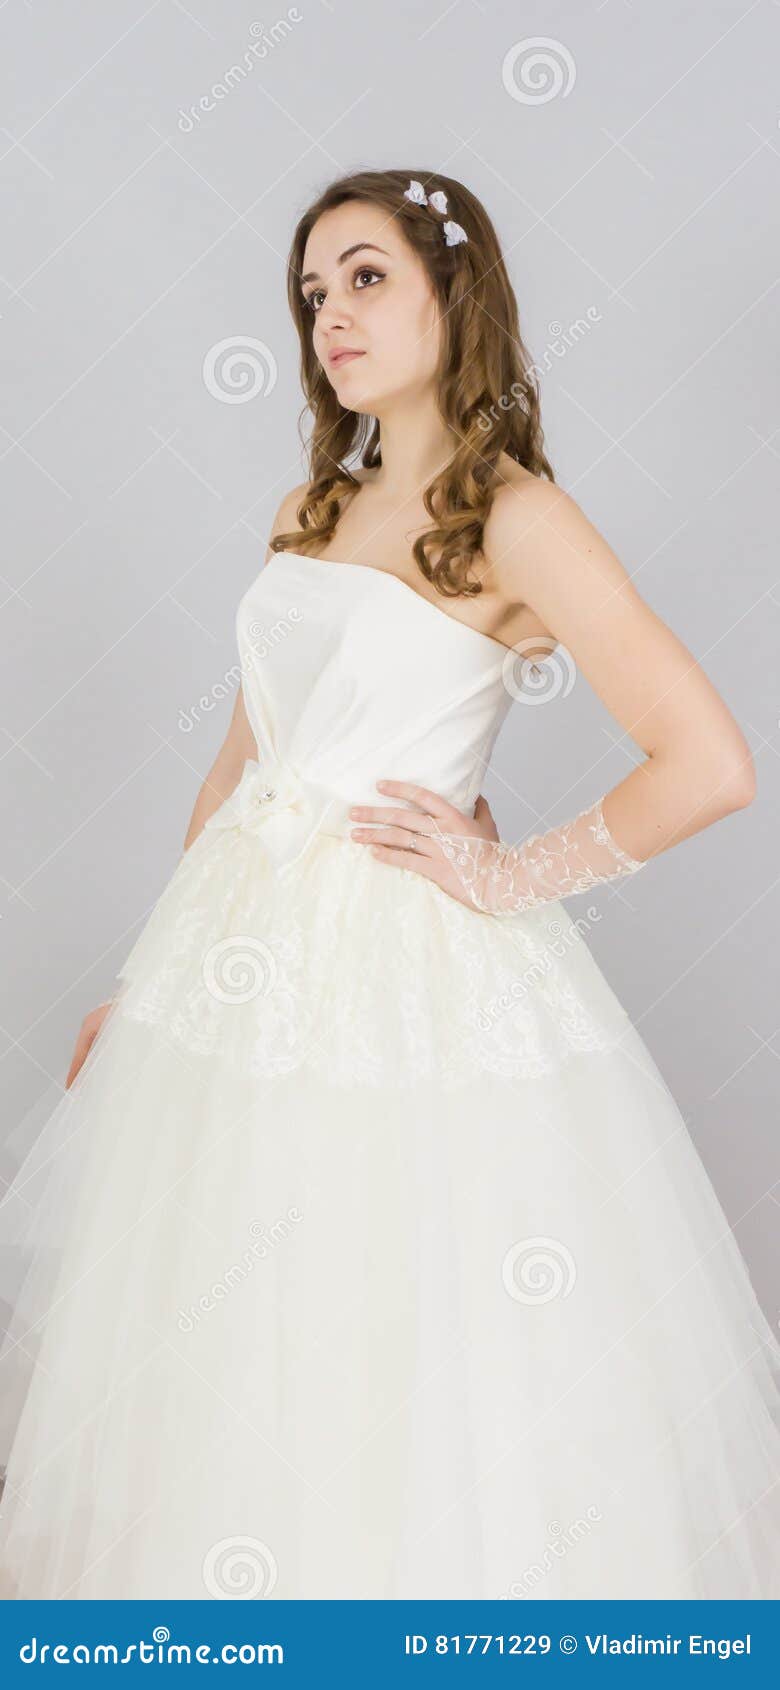 Beautiful Bride on White Background. Dress Stock Image - Image of hair ...